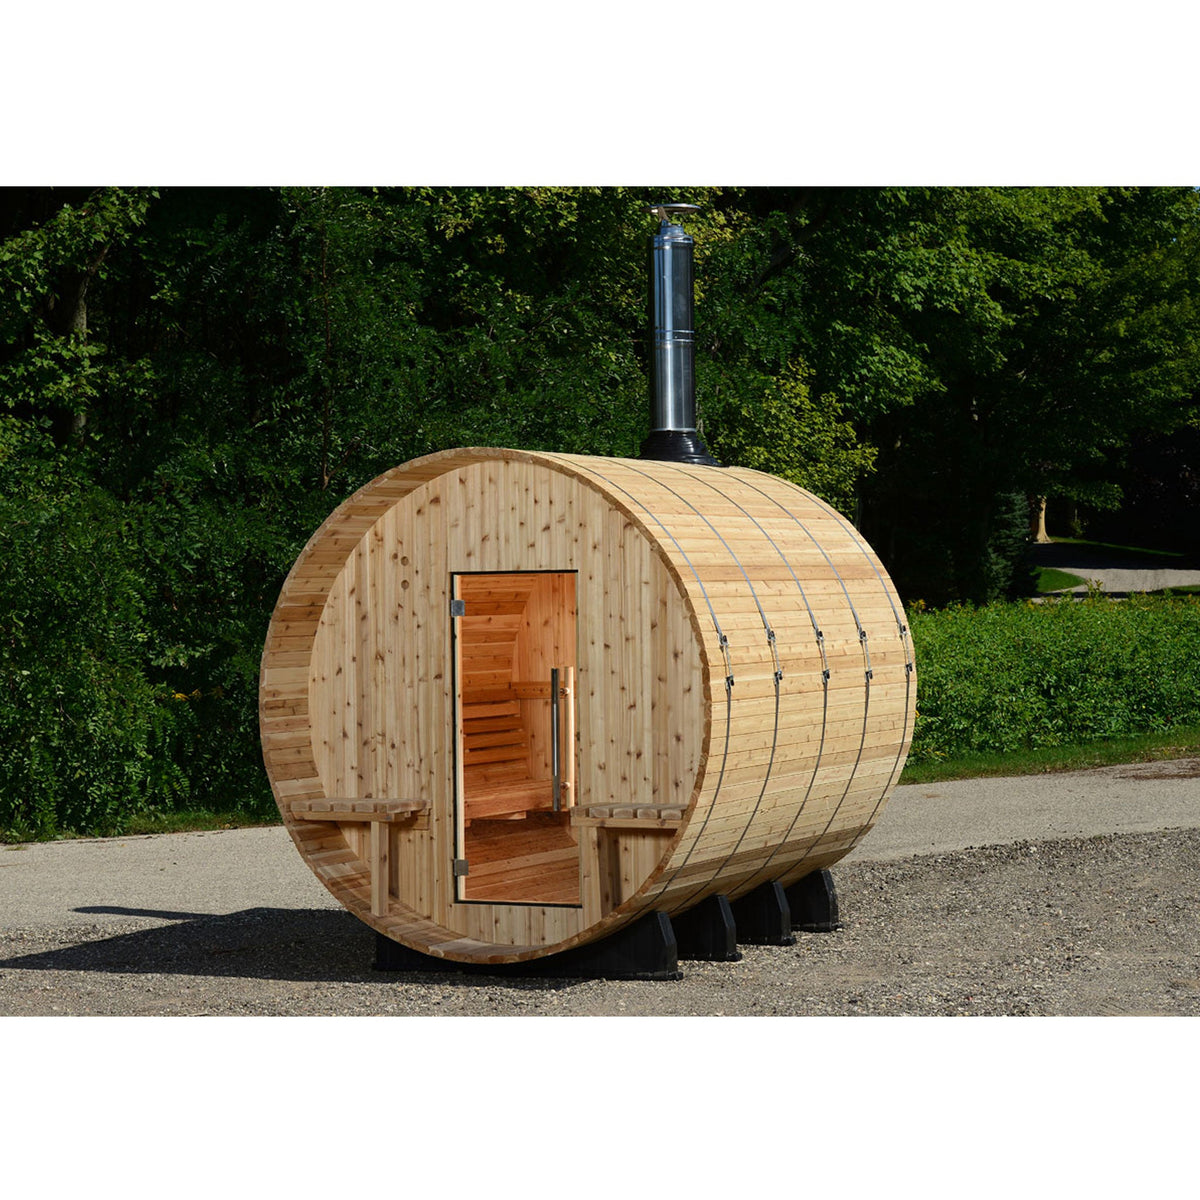 Almost Heaven Grandview 4-6 Person Canopy Barrel Sauna-Traditional Saunas-Nordica Sauna